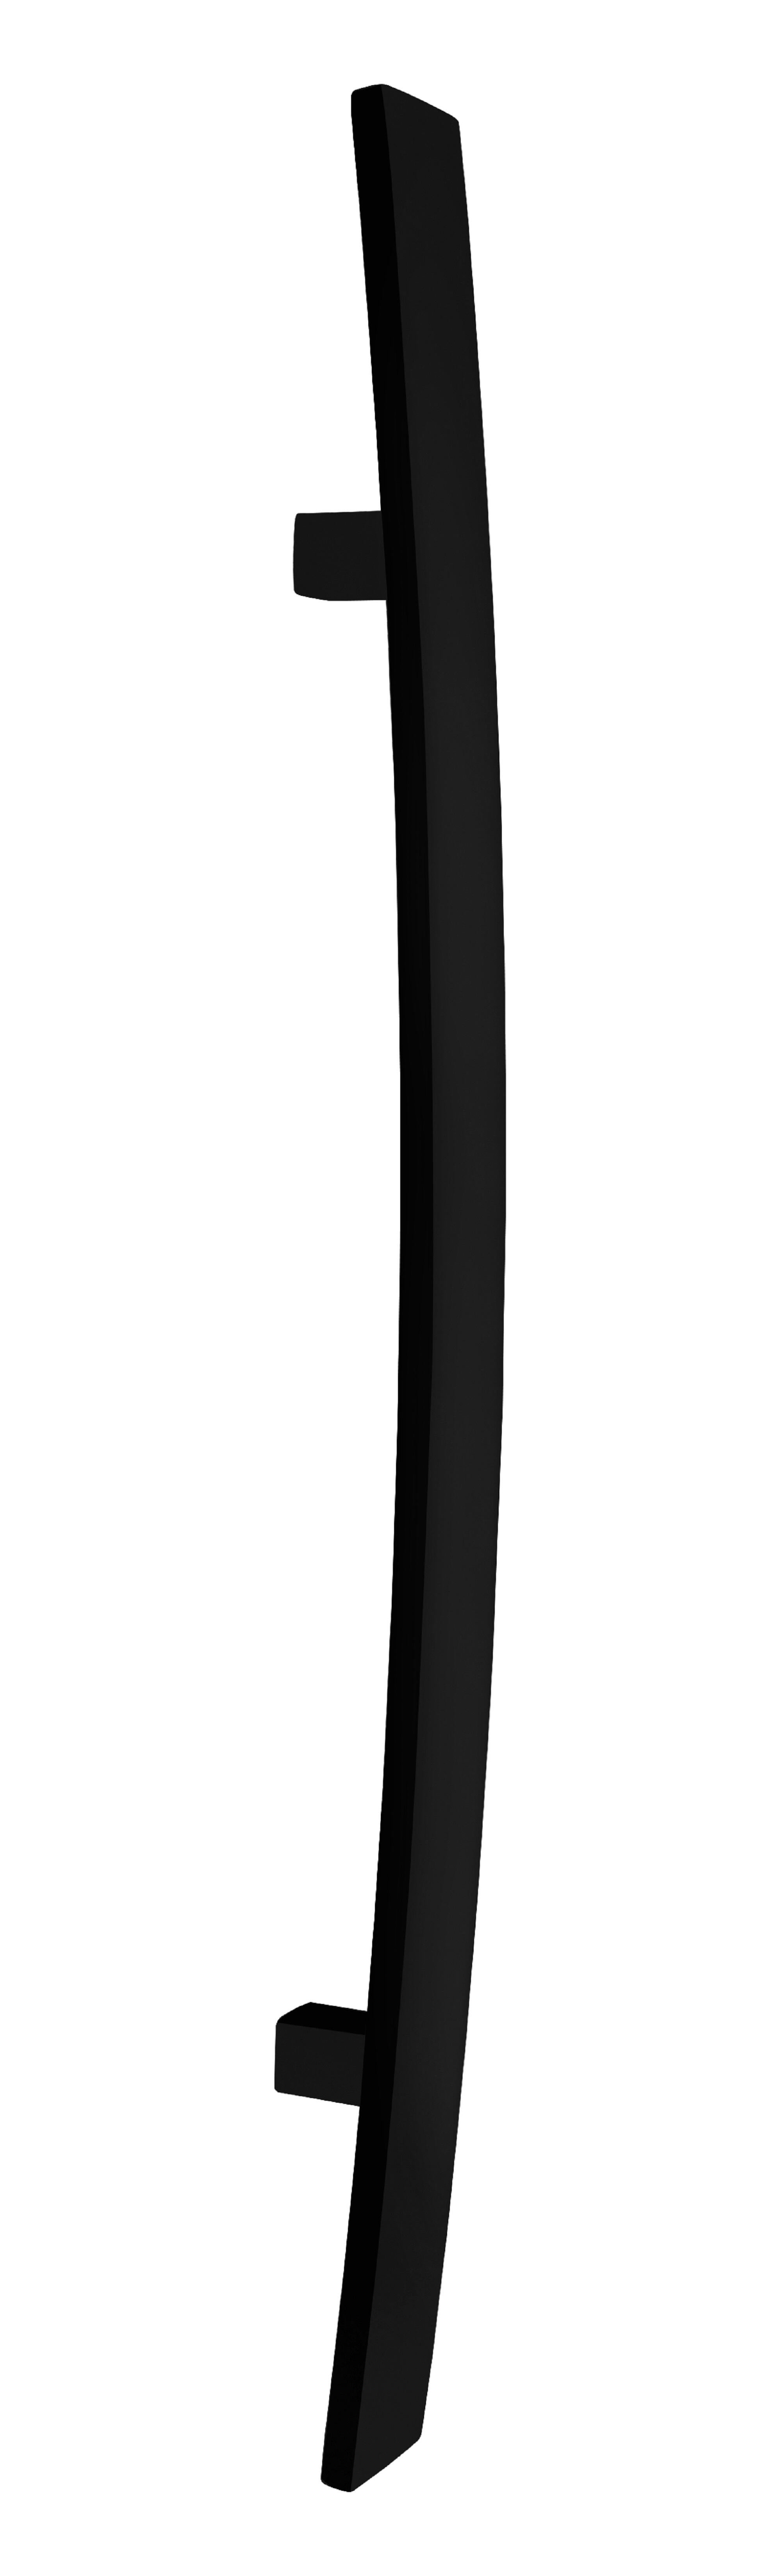 Manillón curvo inox 600mm epoxi negro